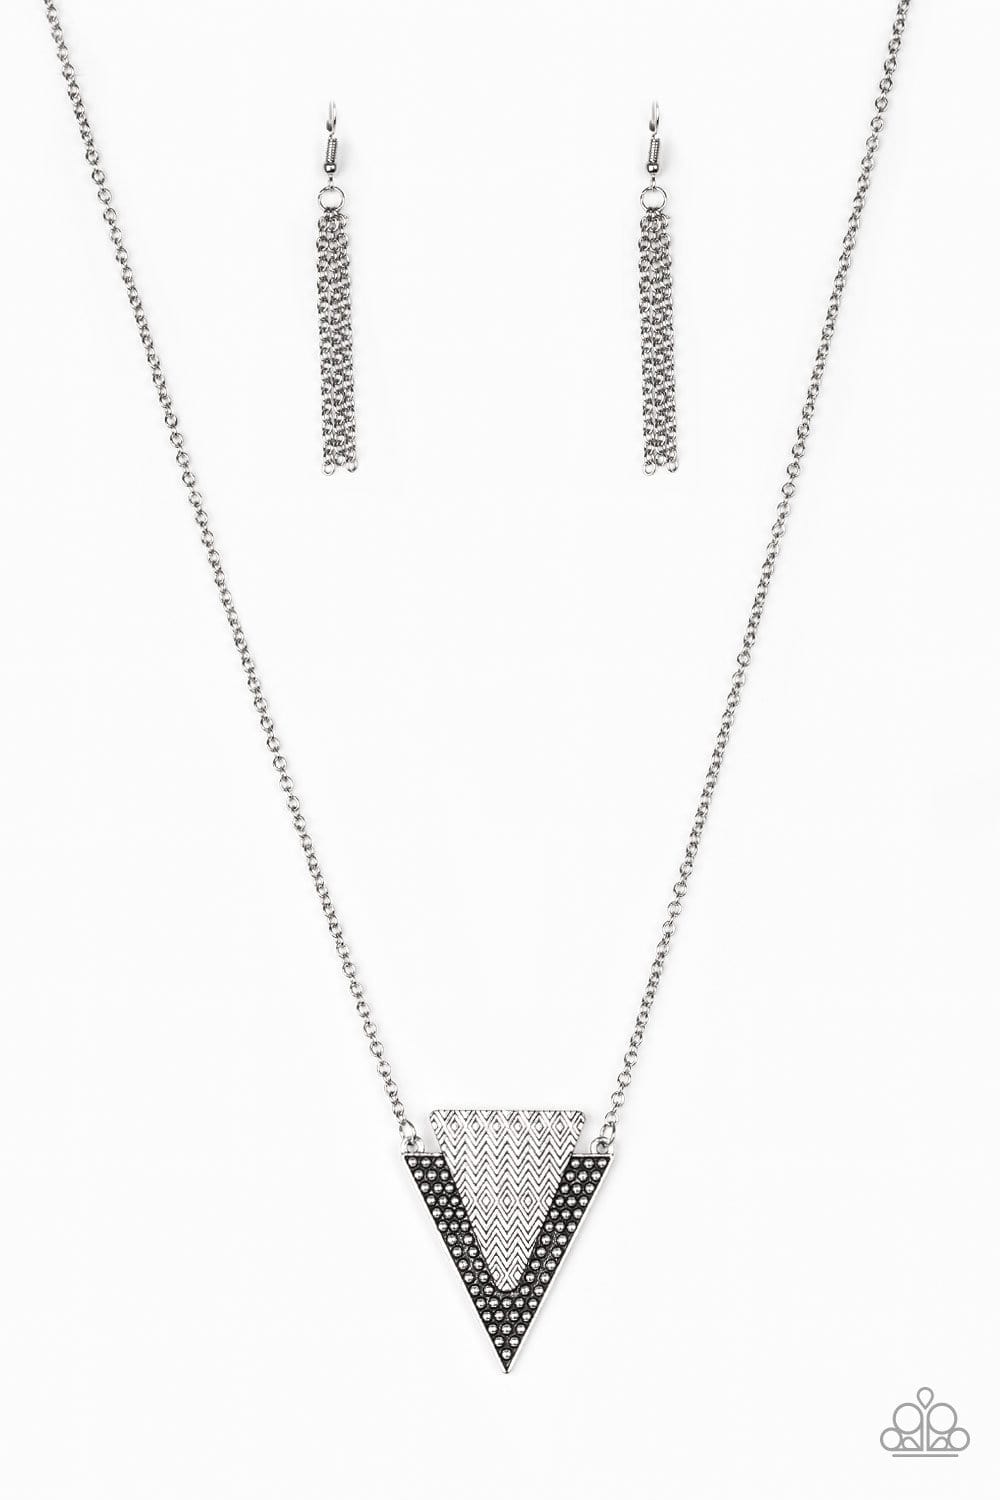 Paparazzi: Ancient Arrow - Silver Pendant Necklace - Jewels N’ Thingz Boutique